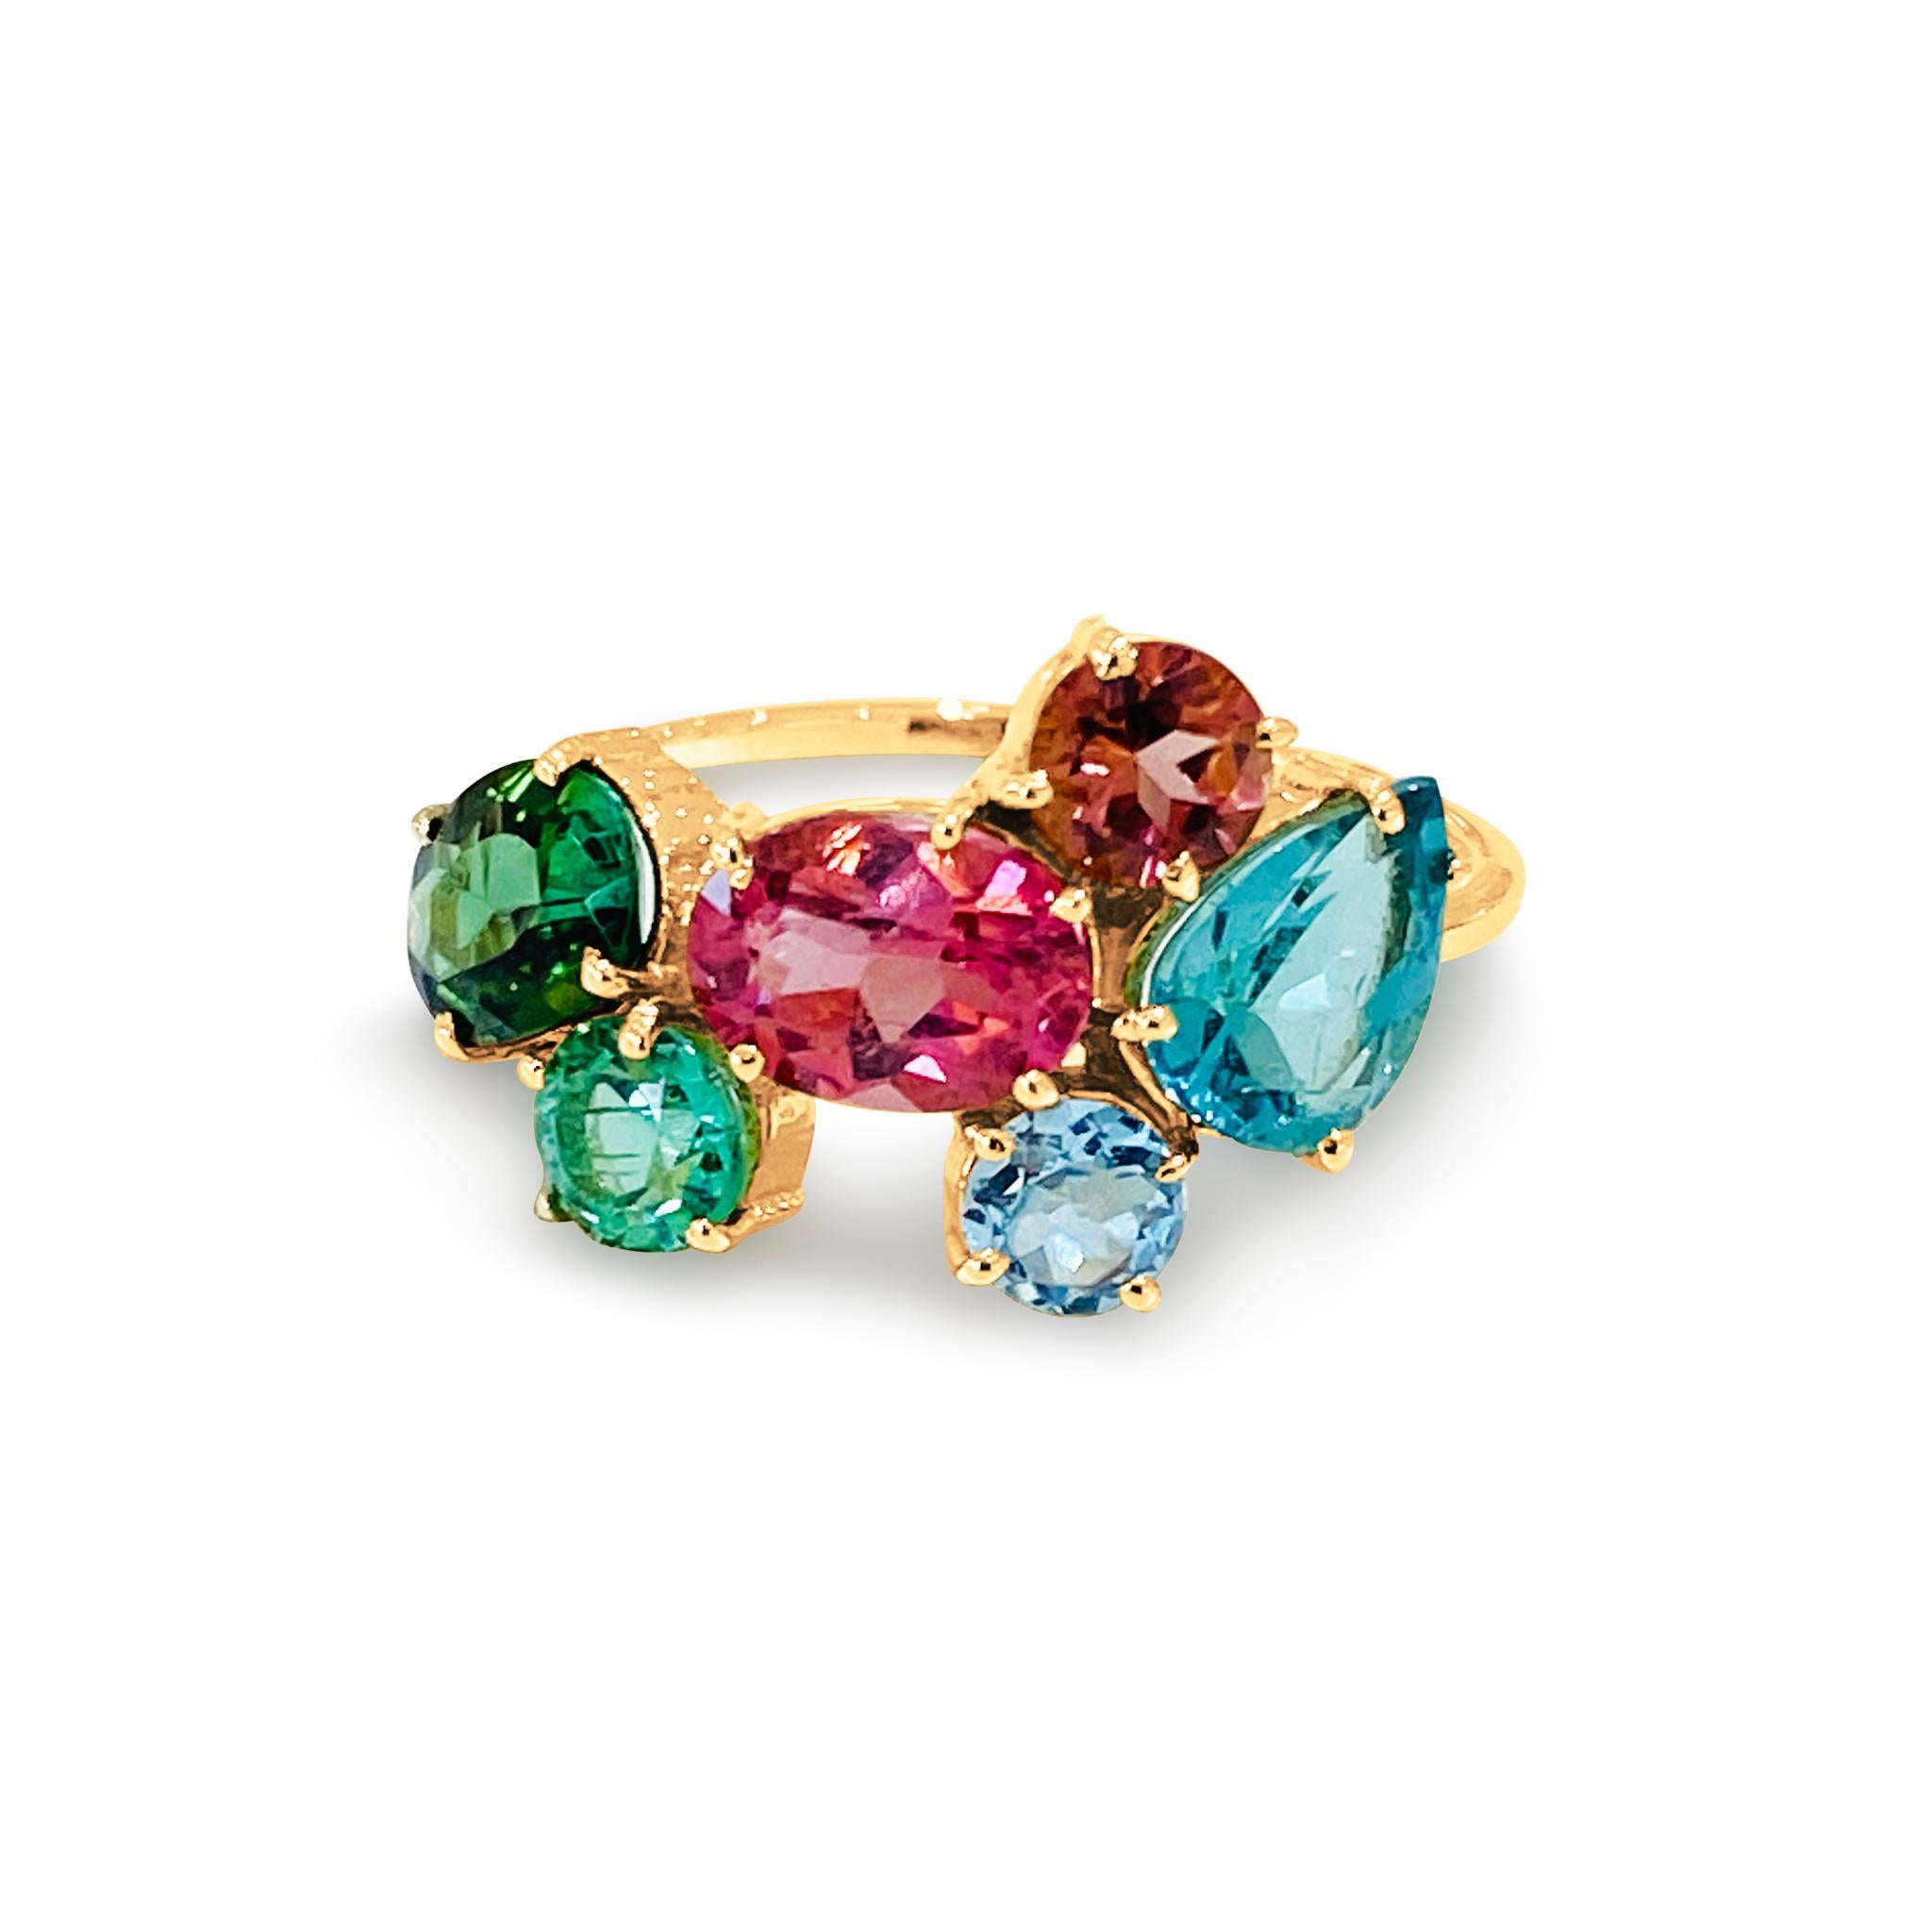 Brilliant Cut Multicolor Tourmaline Bouquet Ring in 18k YG